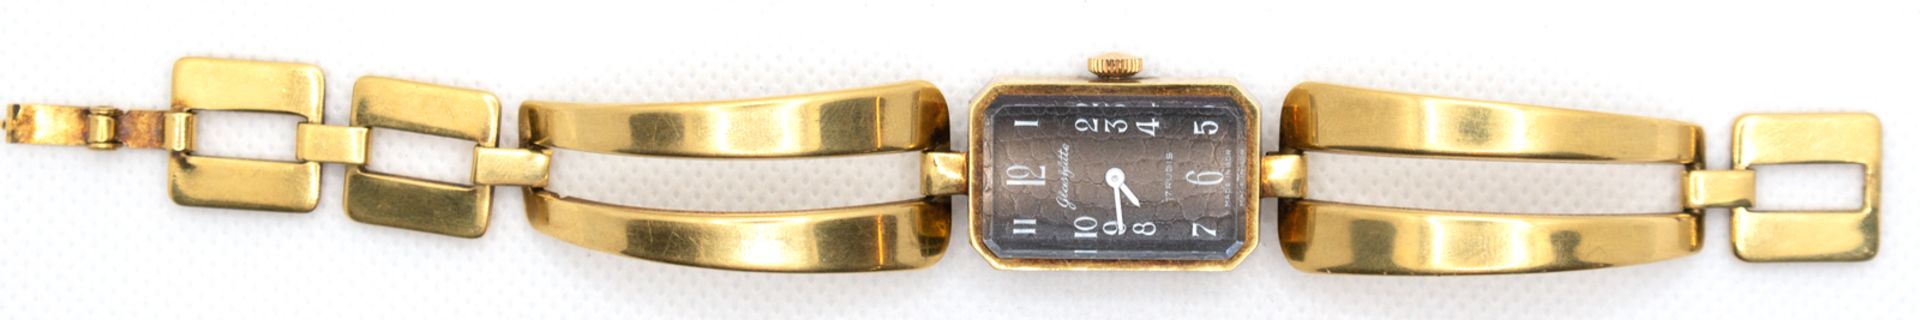 Damen-Armbanduhr "Glashütte", Made in GDR, Handaufzug, achteckiges braunes Zifferblatt in Lederopti